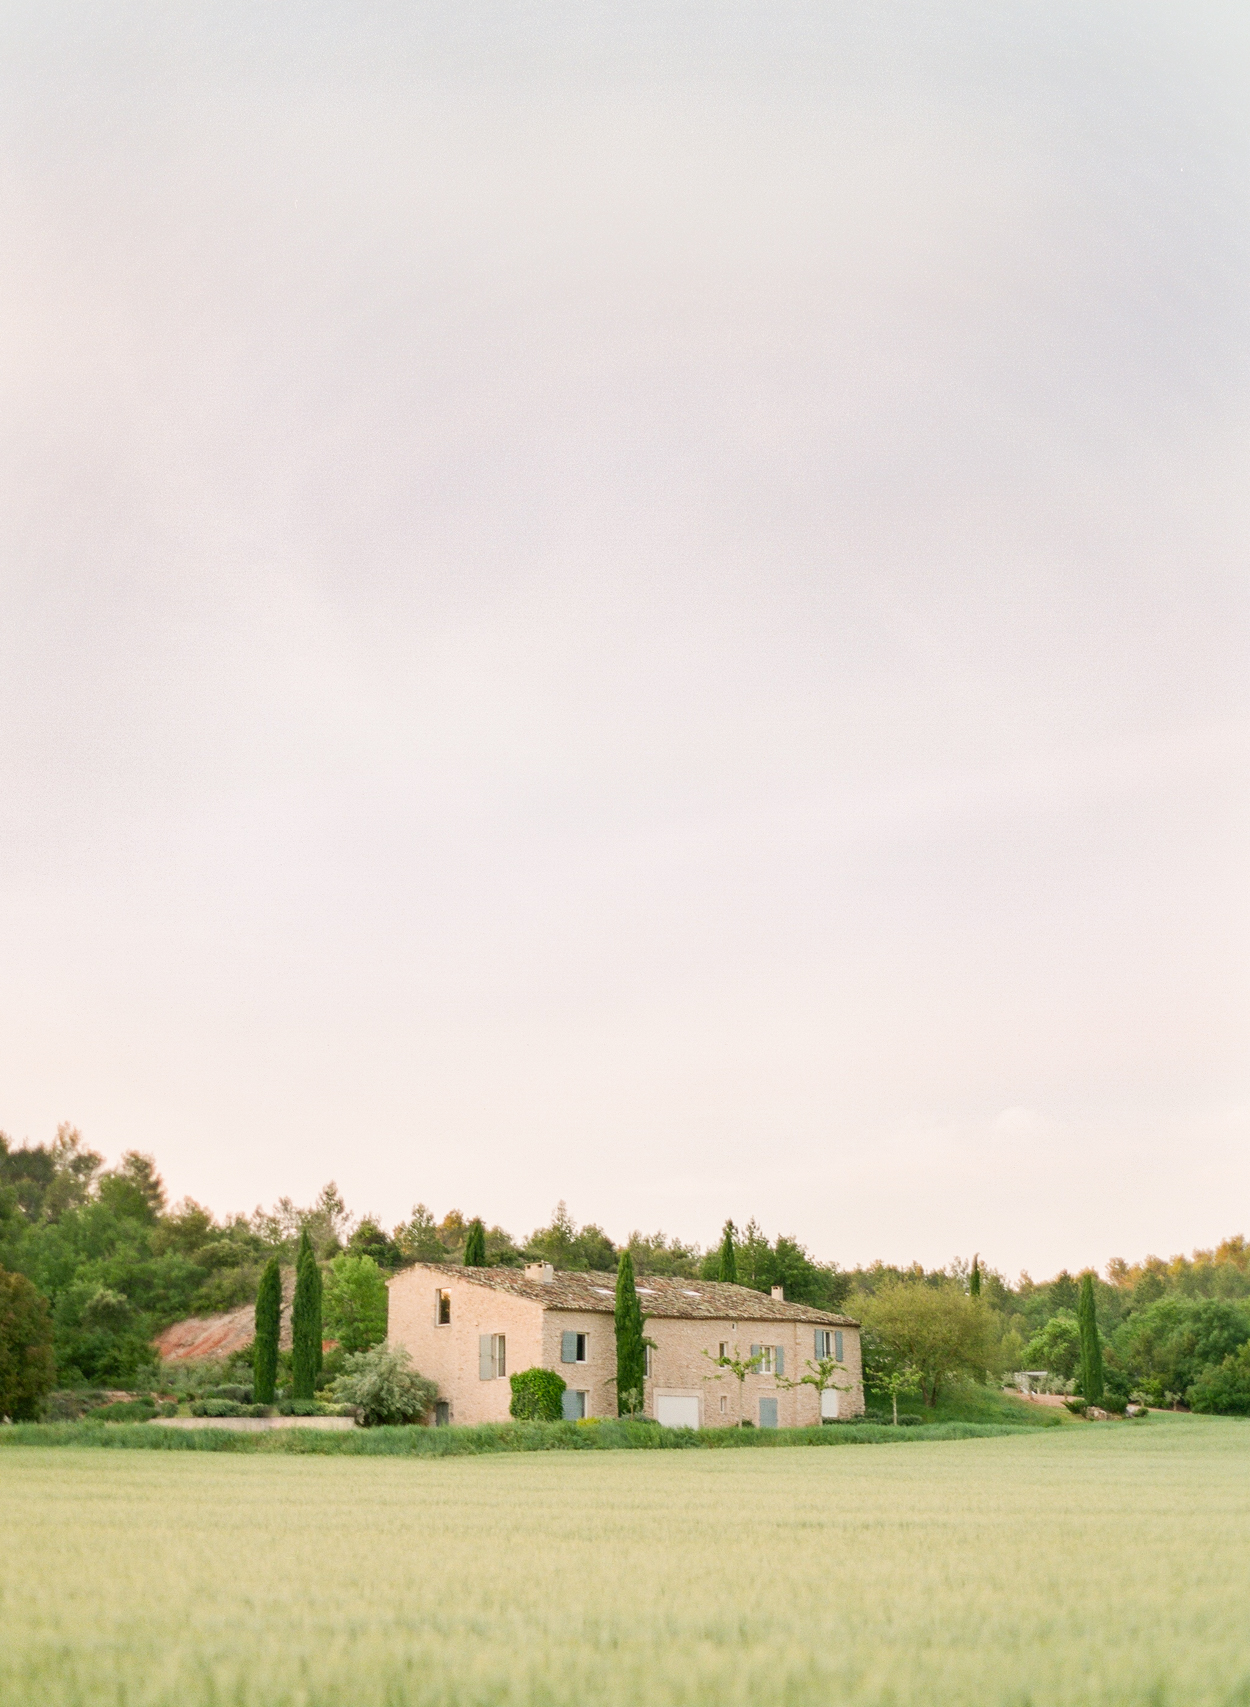 Provence wedding photography | Film photographer | Molly Carr Photography | France wedding